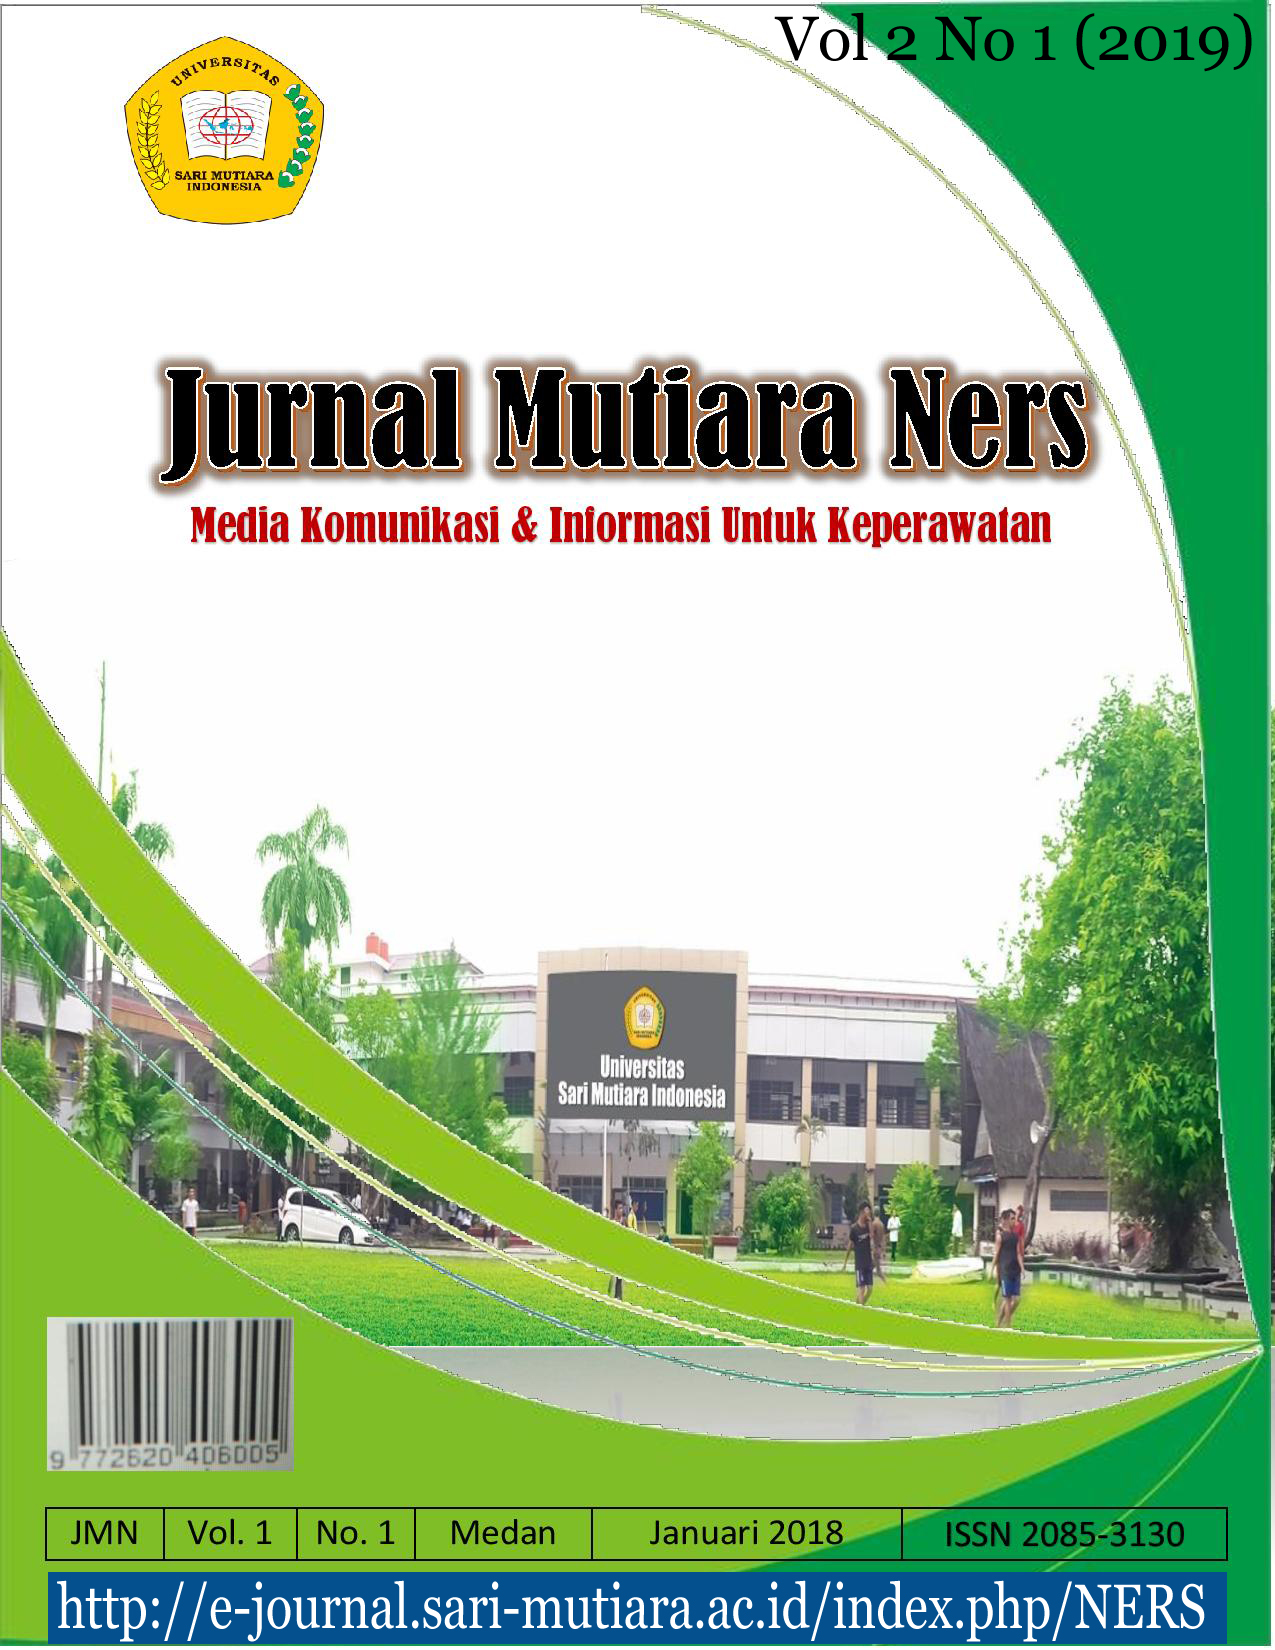 					View Vol. 2 No. 2 (2019): JURNAL MUTIARA NERS
				